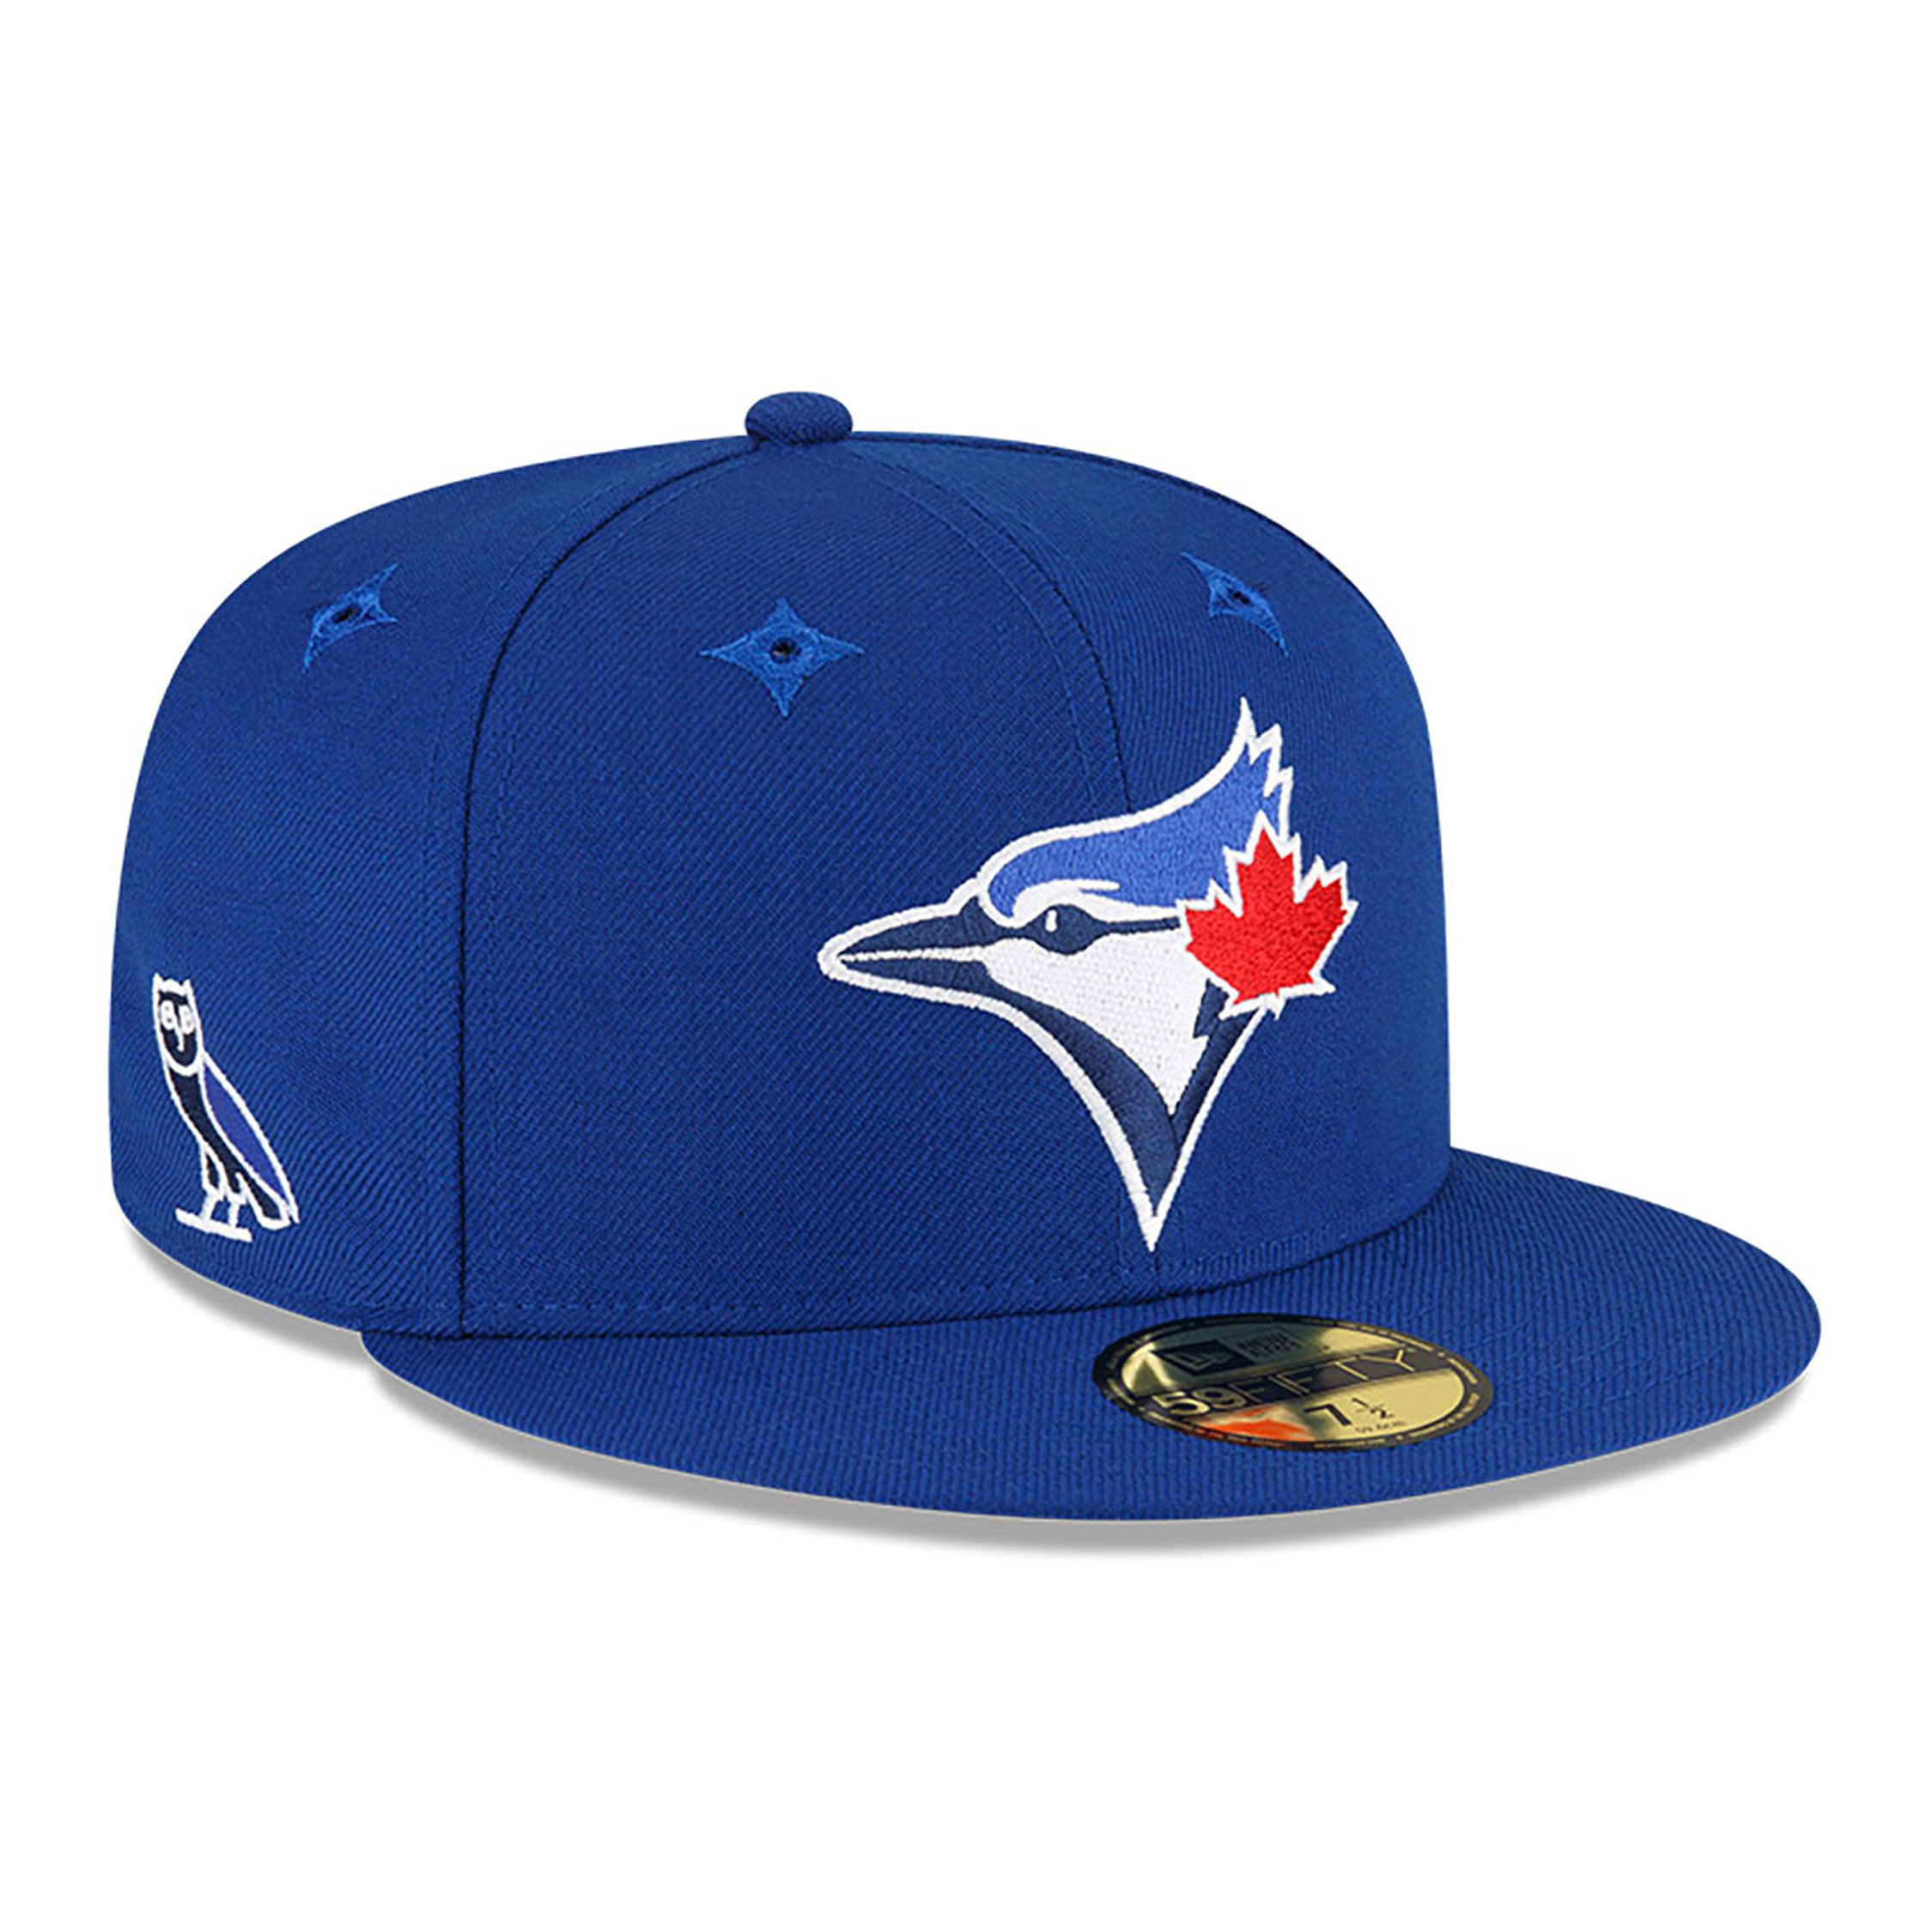 OVO x MLB Toronto Blue Jays 59FIFTY Fitted Cap D03_210 | New Era Cap DK